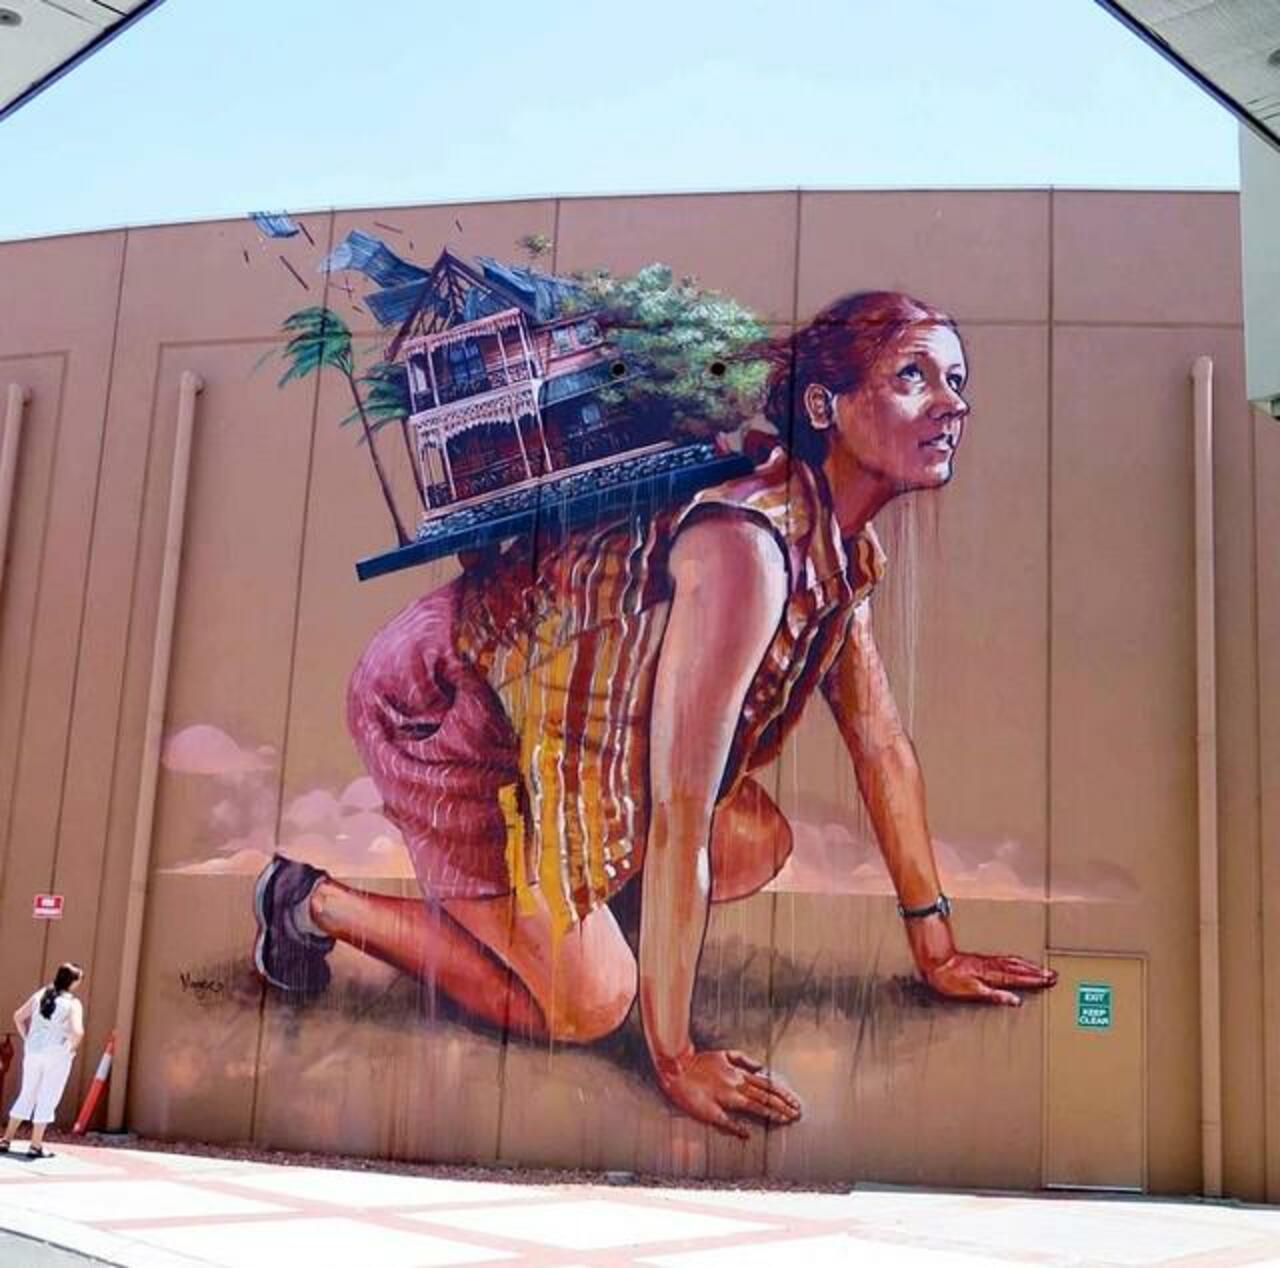 Latest Fintan Magee massive Street Art piece in Bunbury, Western Australia 

#art #graffiti #mural #streetart http://t.co/cwsP8vghum